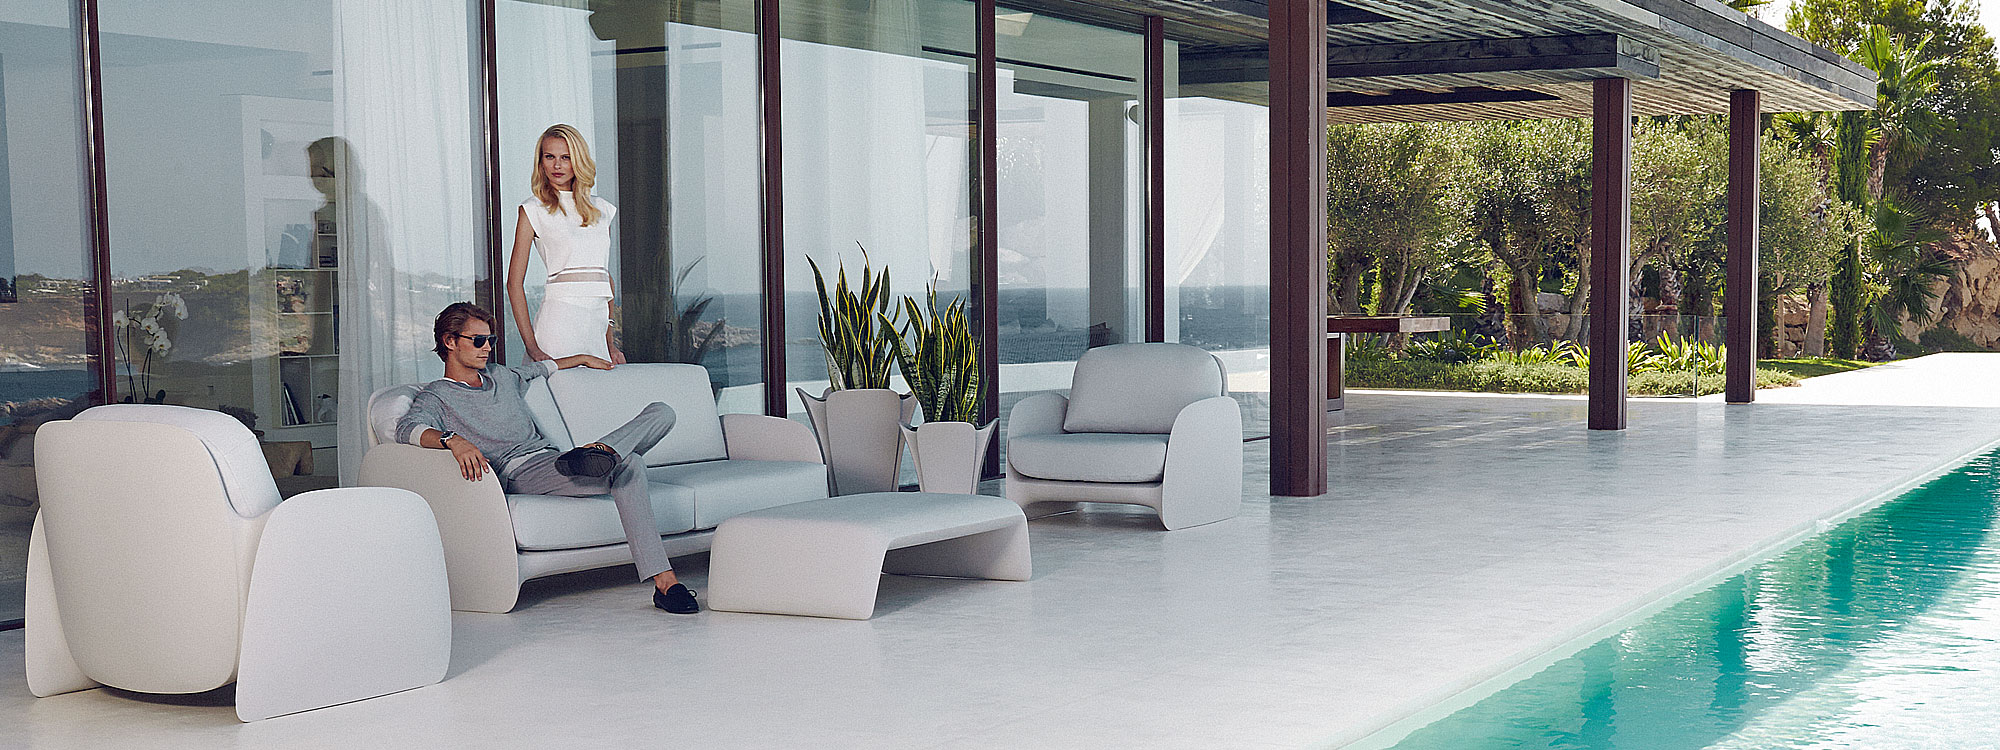 Taupe Pezzattina ORGANIC Design Garden SOFA. MODERN Garden Furniture LOUNGE Set In ALL WEATHER Lounge Furniture Materials By Vondom LUXURY Outdoor SOFA Company.